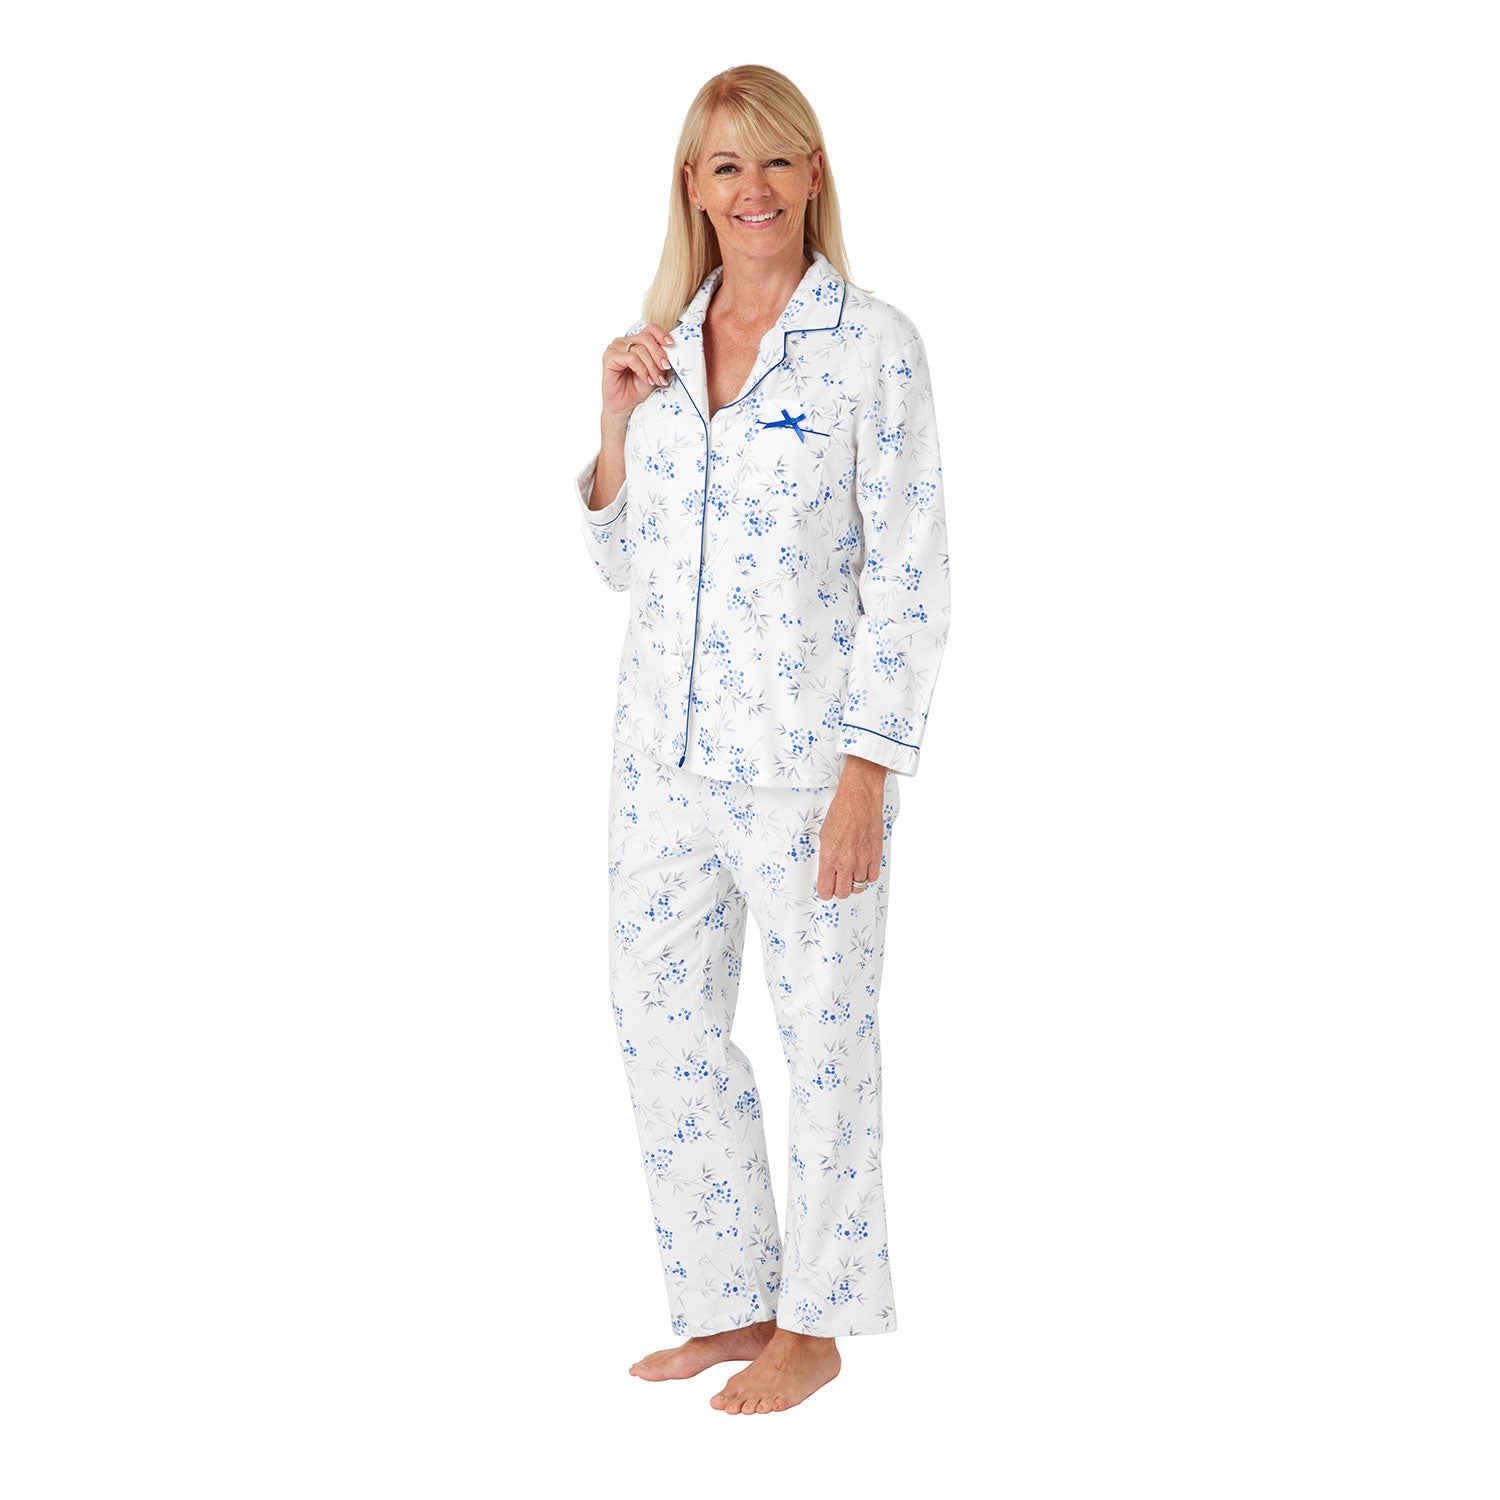 Marlon Tilly Brushed Cotton Pyjama - Blue 1 Shaws Department Stores